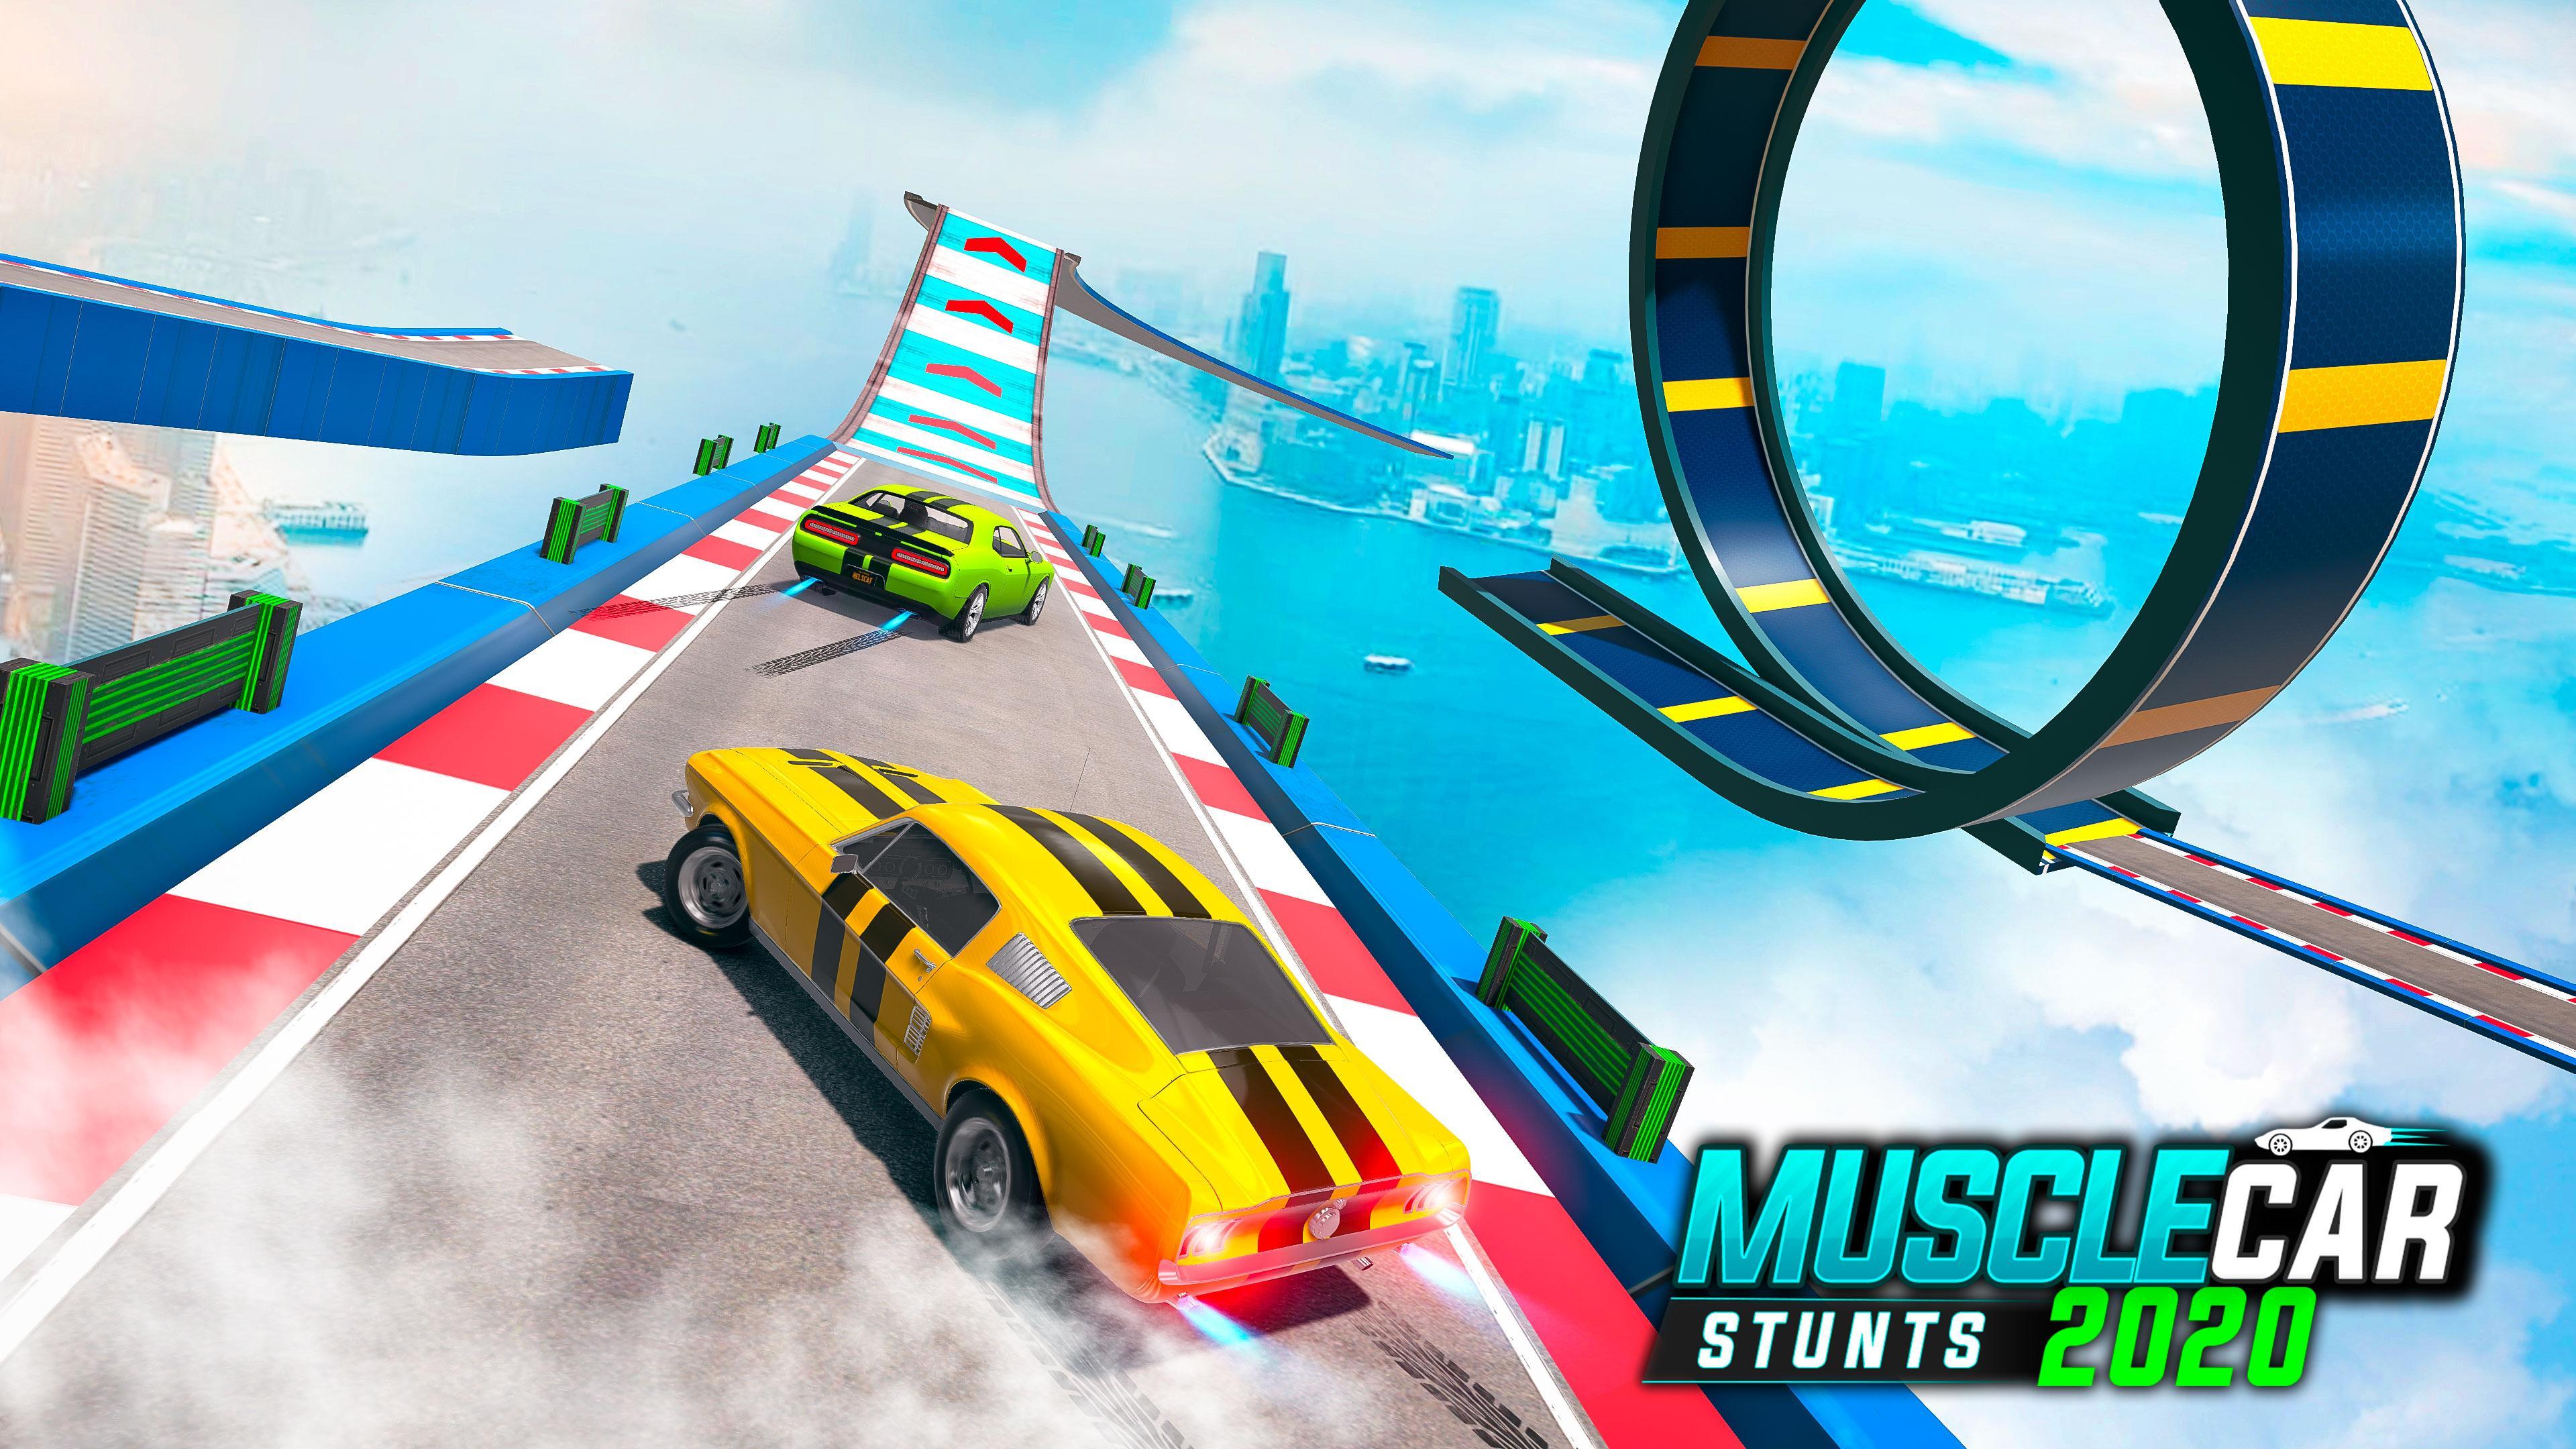 Muscle Car Stunts 2020 Mega Ramp Stunt Car Games 1.0.9 Screenshot 2